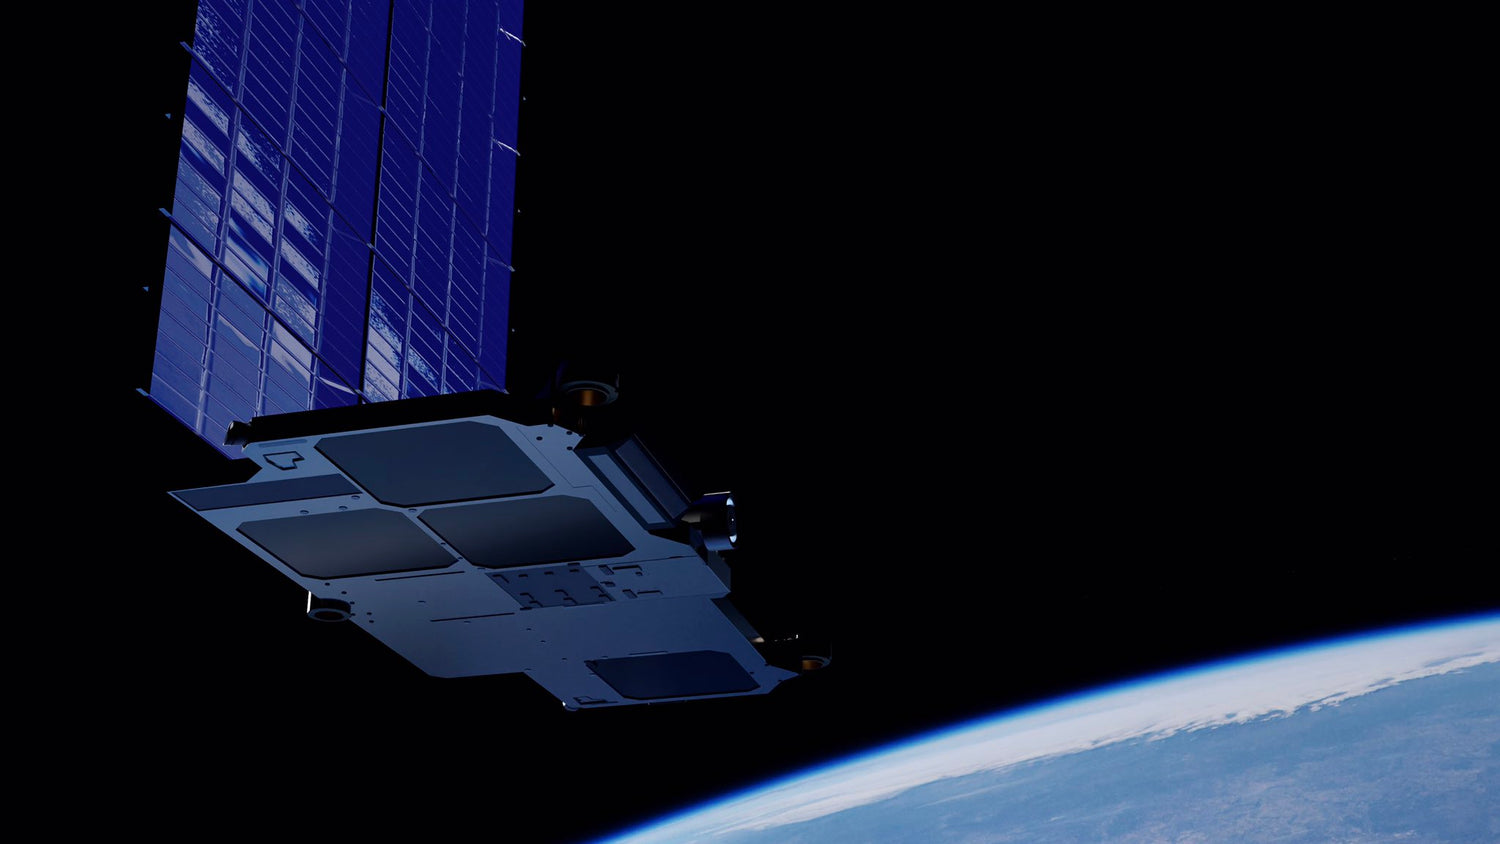 Elon Musk's Starlink satellite internet targets late 2021 launch